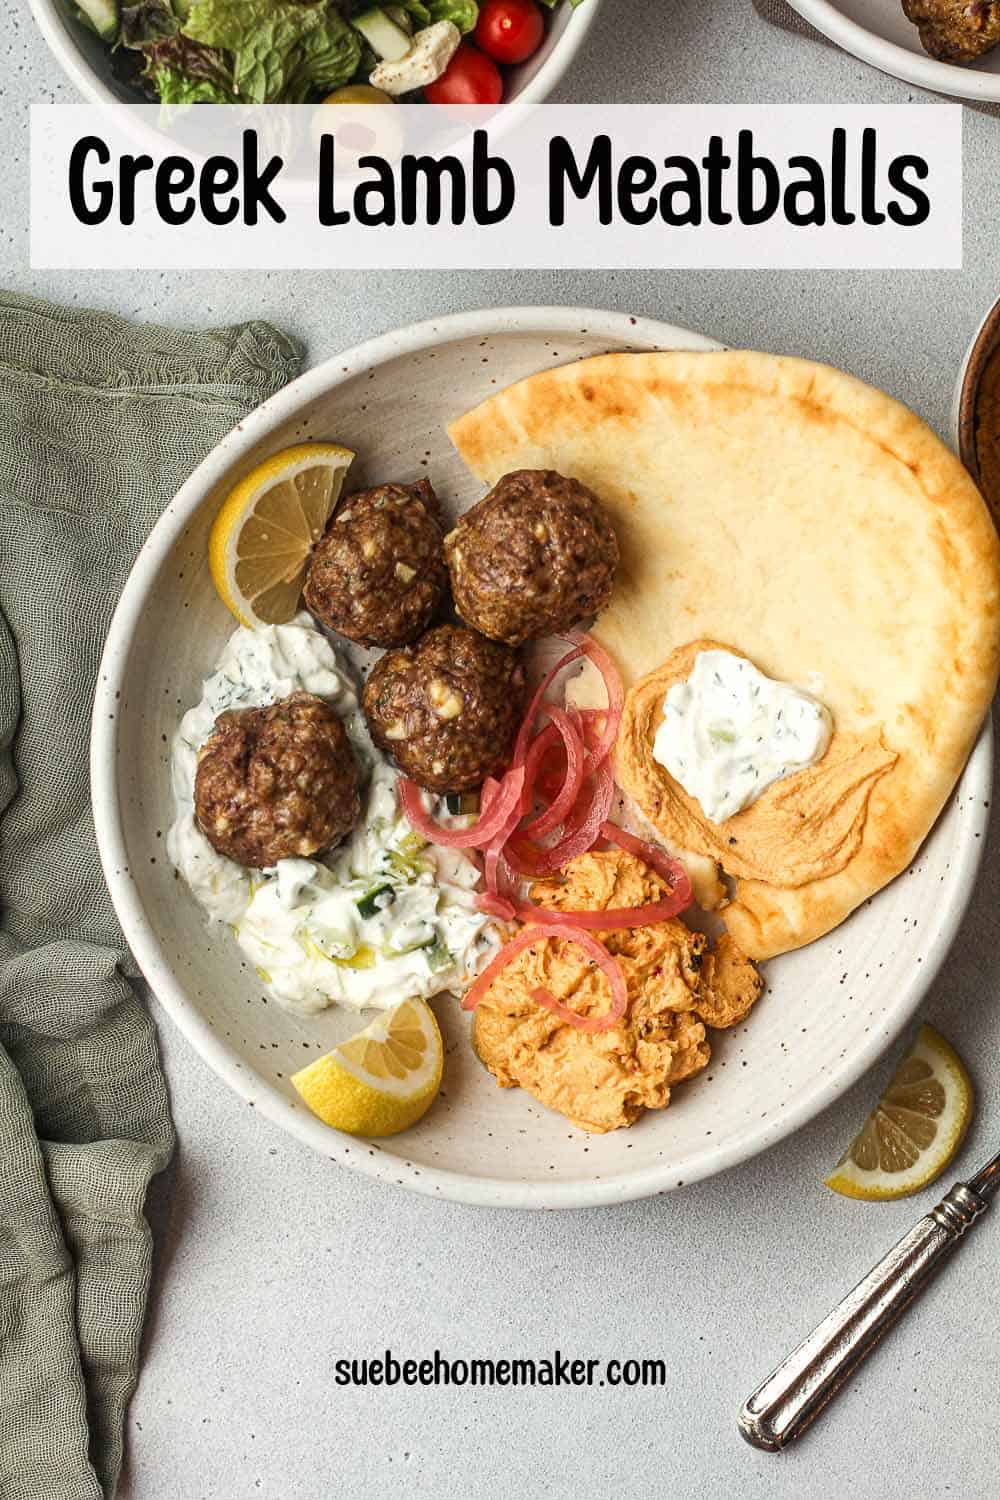 A Greek bowl with lamb meatballs, naan, and tzatziki.